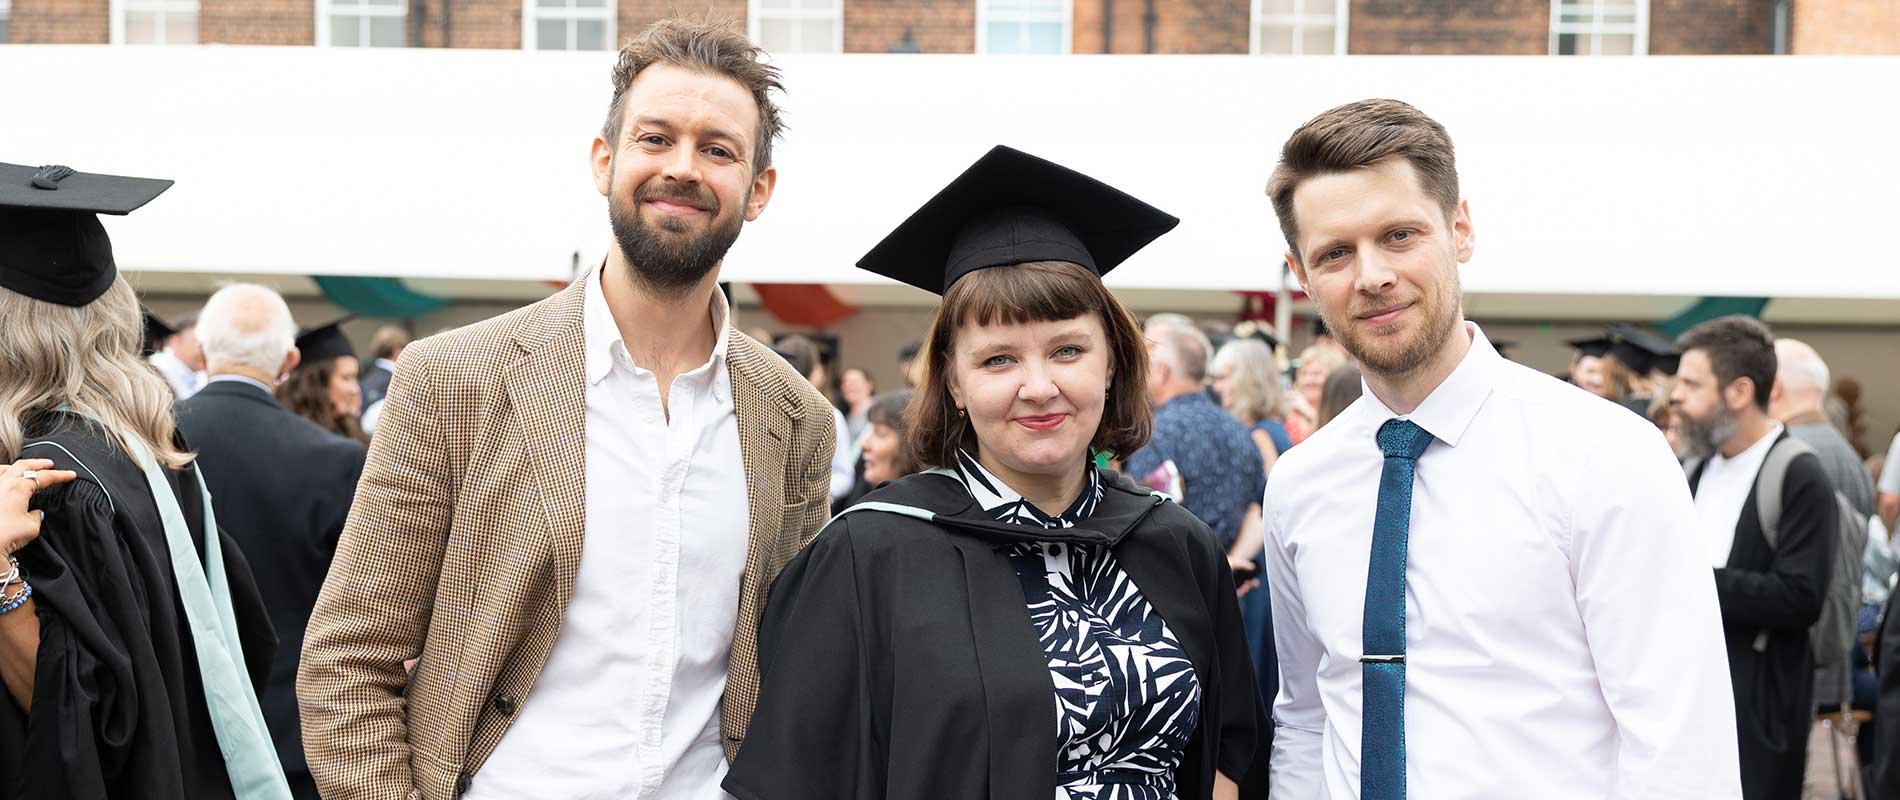 University of Hull Online students and tutors at graduation